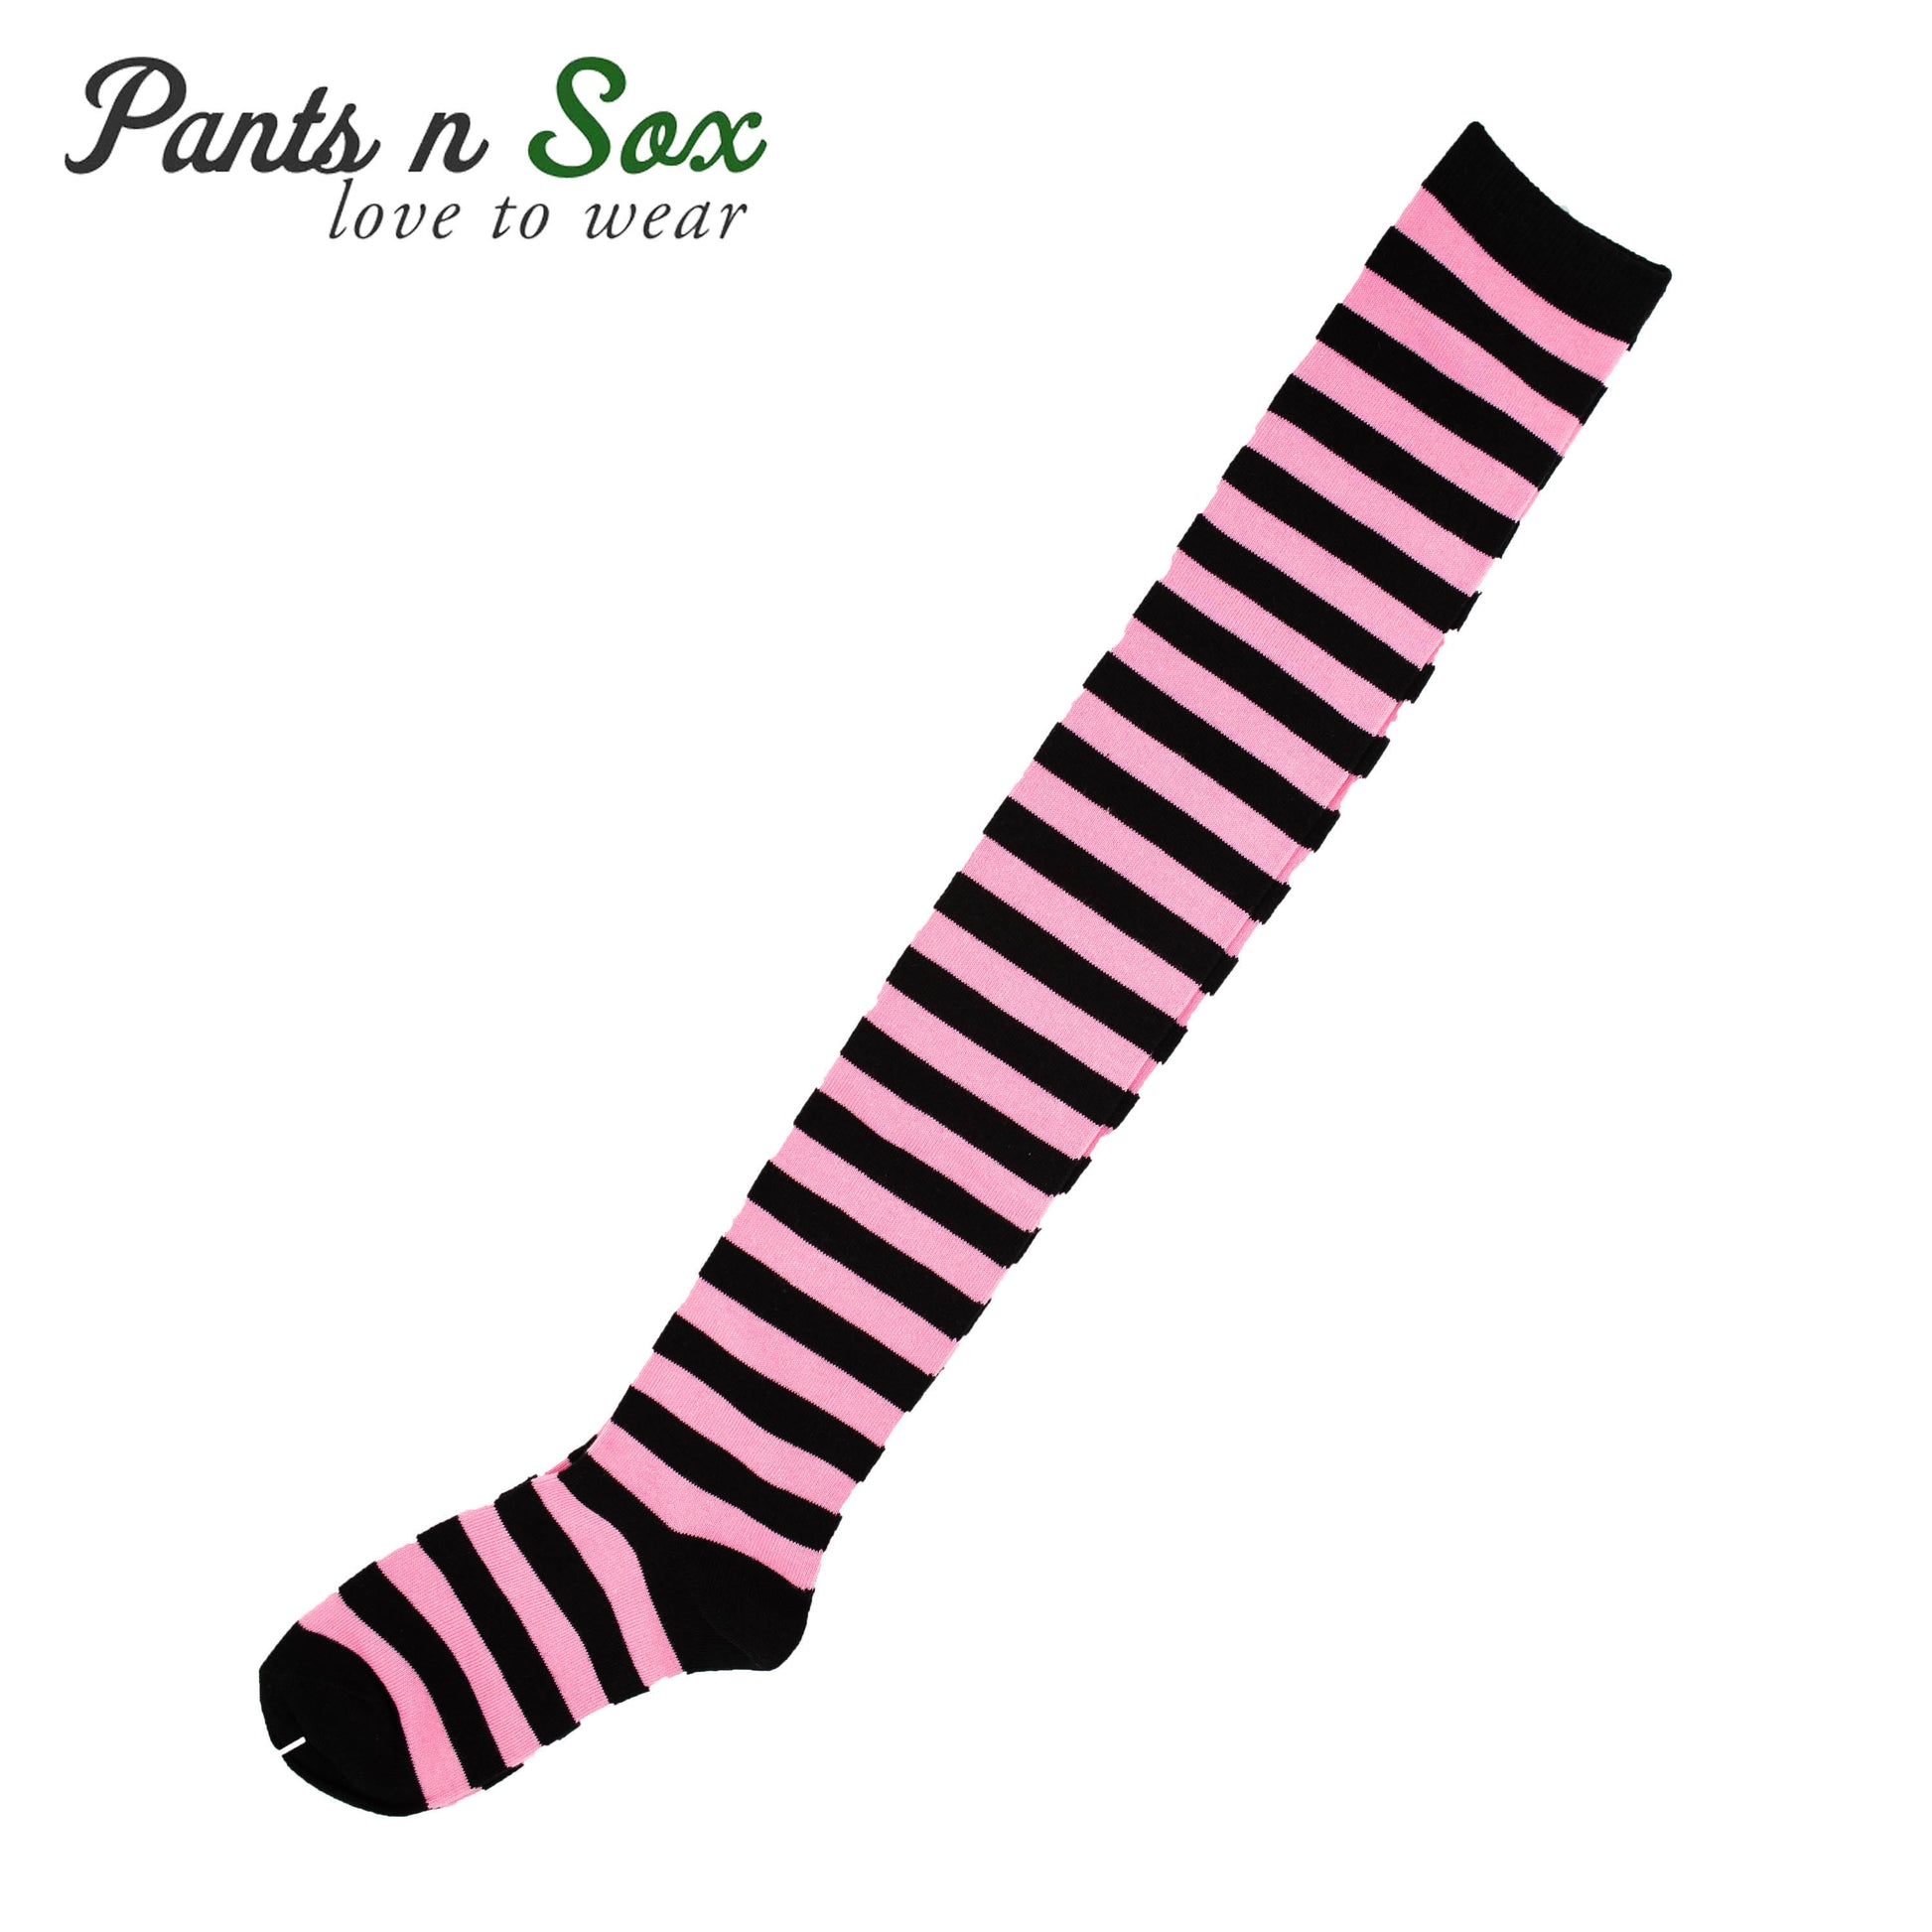 New Womens Ladies Black Pink Striped Thigh High Socks Size 2-8 - Pantsnsox